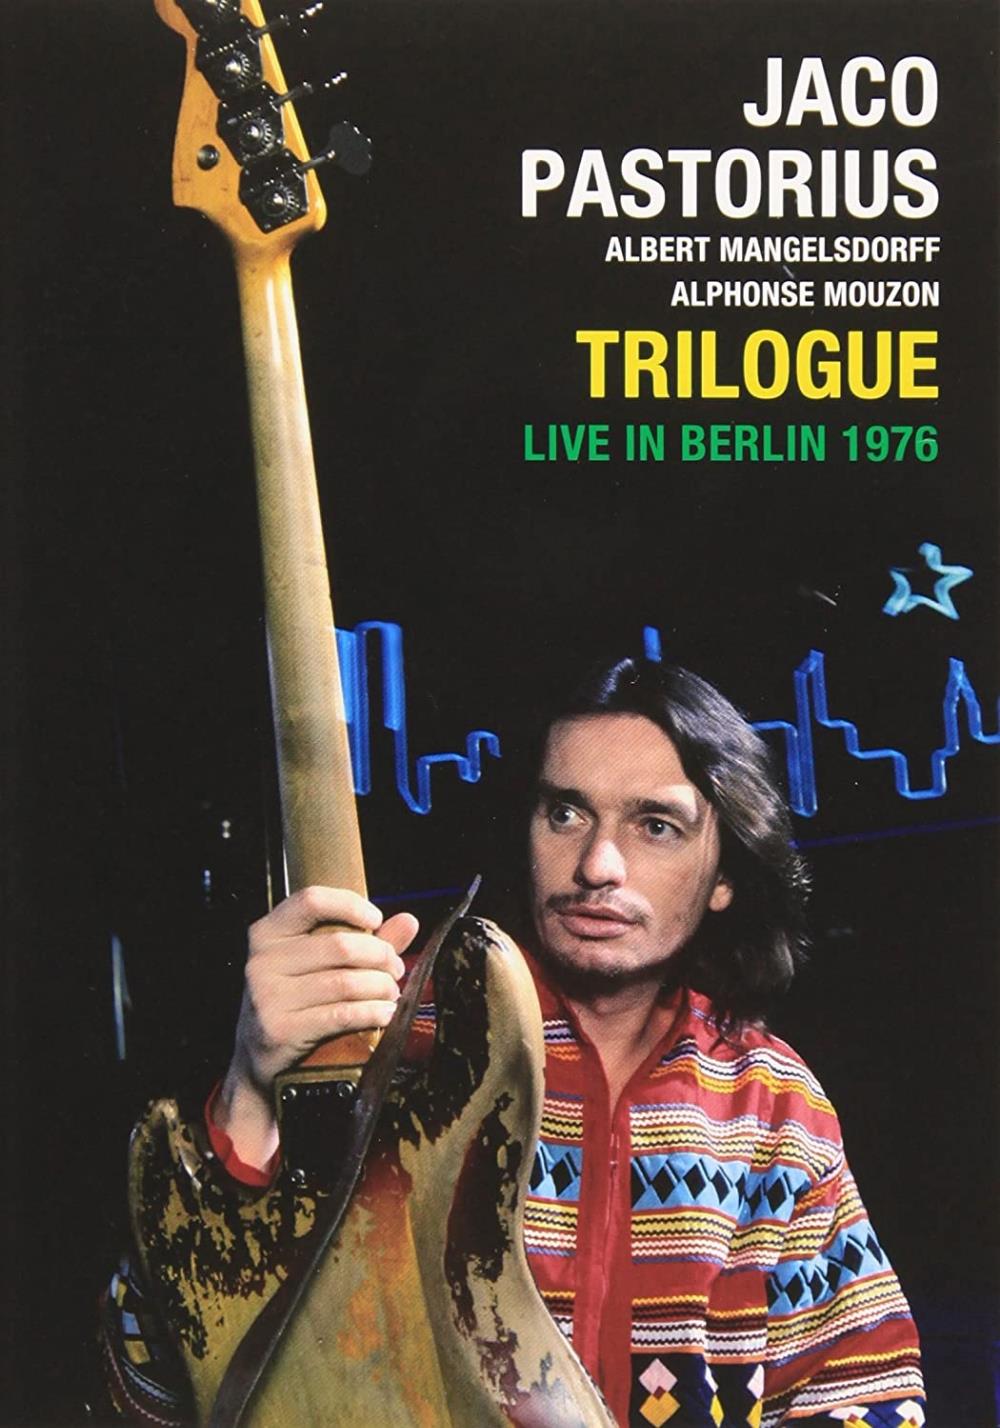 Jaco Pastorius - Trilogue - Live In Berlin 1976 (with Alphonse Mouzon and Albert Mangelsdorff) CD (album) cover